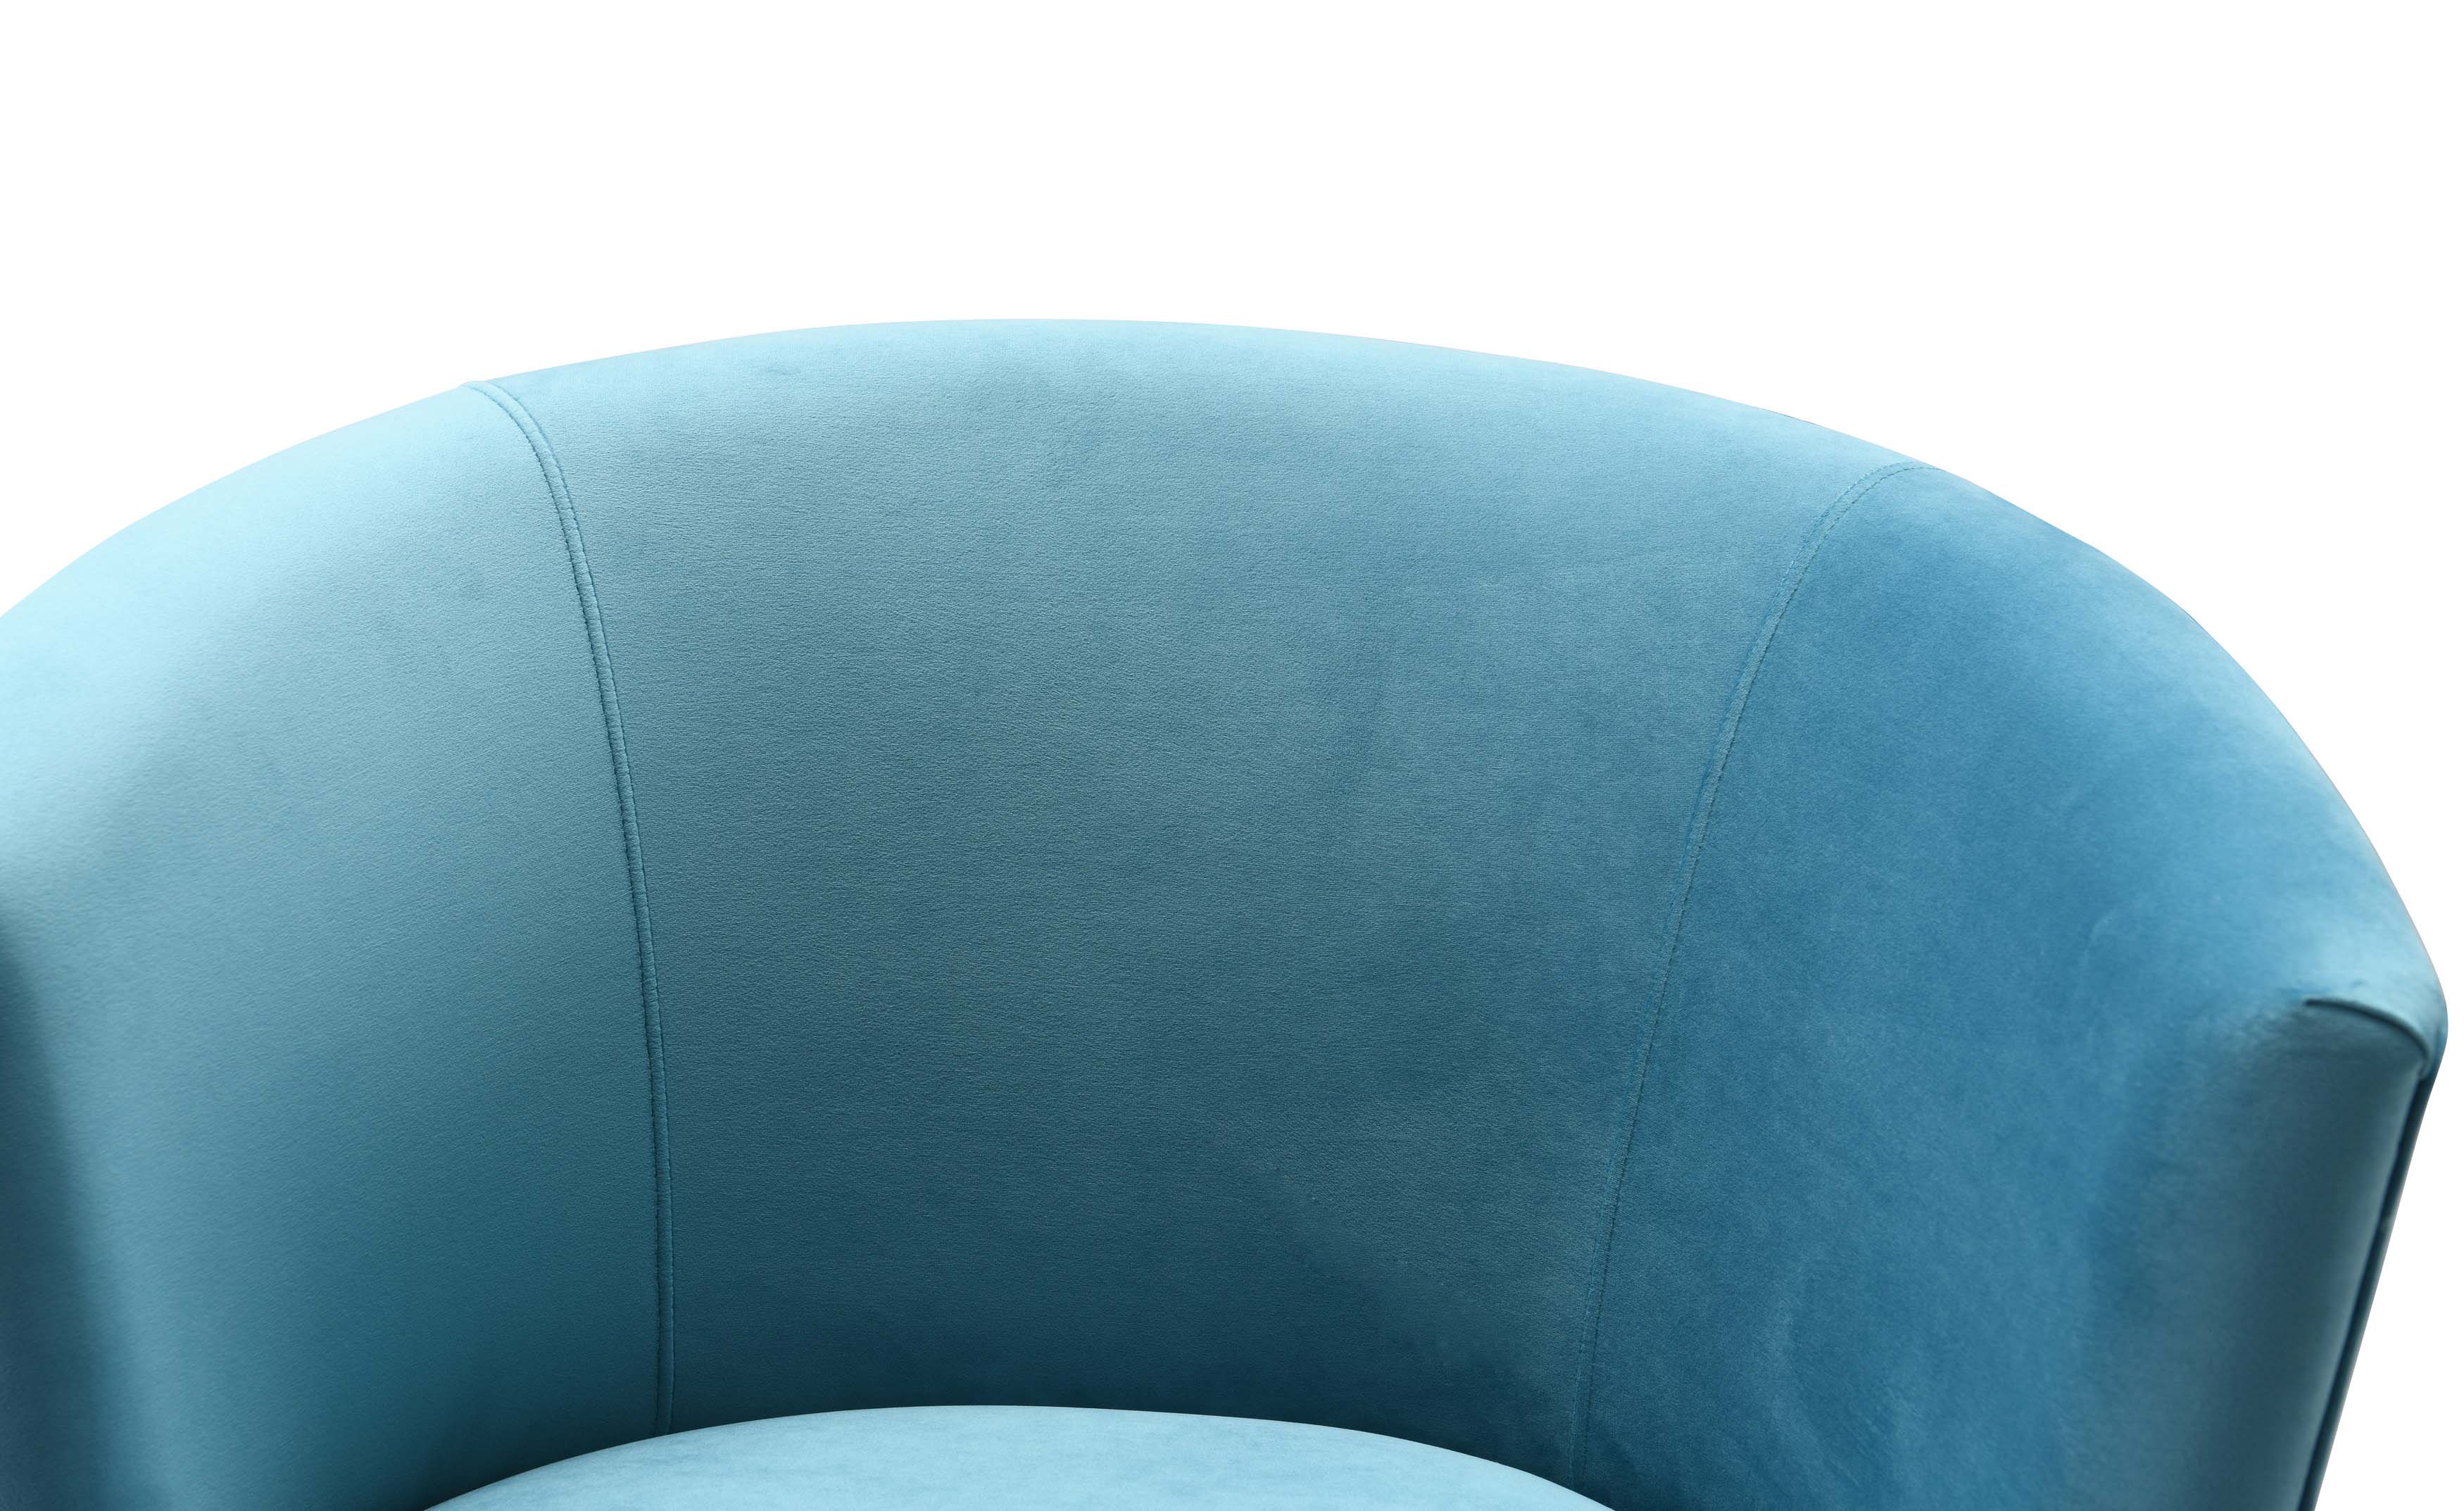 Noah Gold Base Lake Blue Swivel Chair by TOV Furniture - image 4 of 6